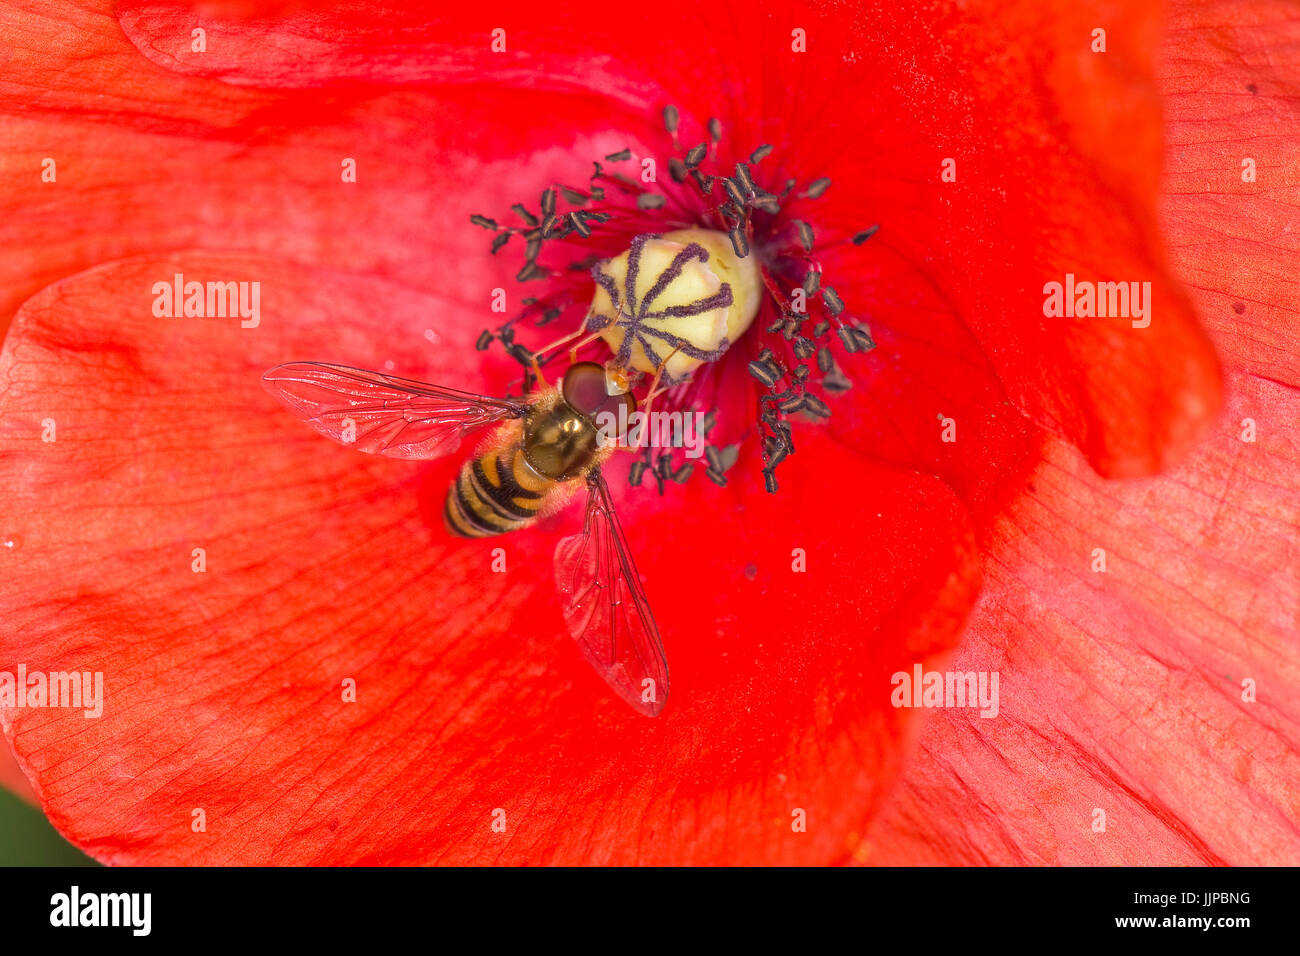 Hoverfly, Episyrphus balteatus, alimentándose de la flor roja de una larga encabezó la amapola, Papaver dubium, Berkshire, Julio Foto de stock